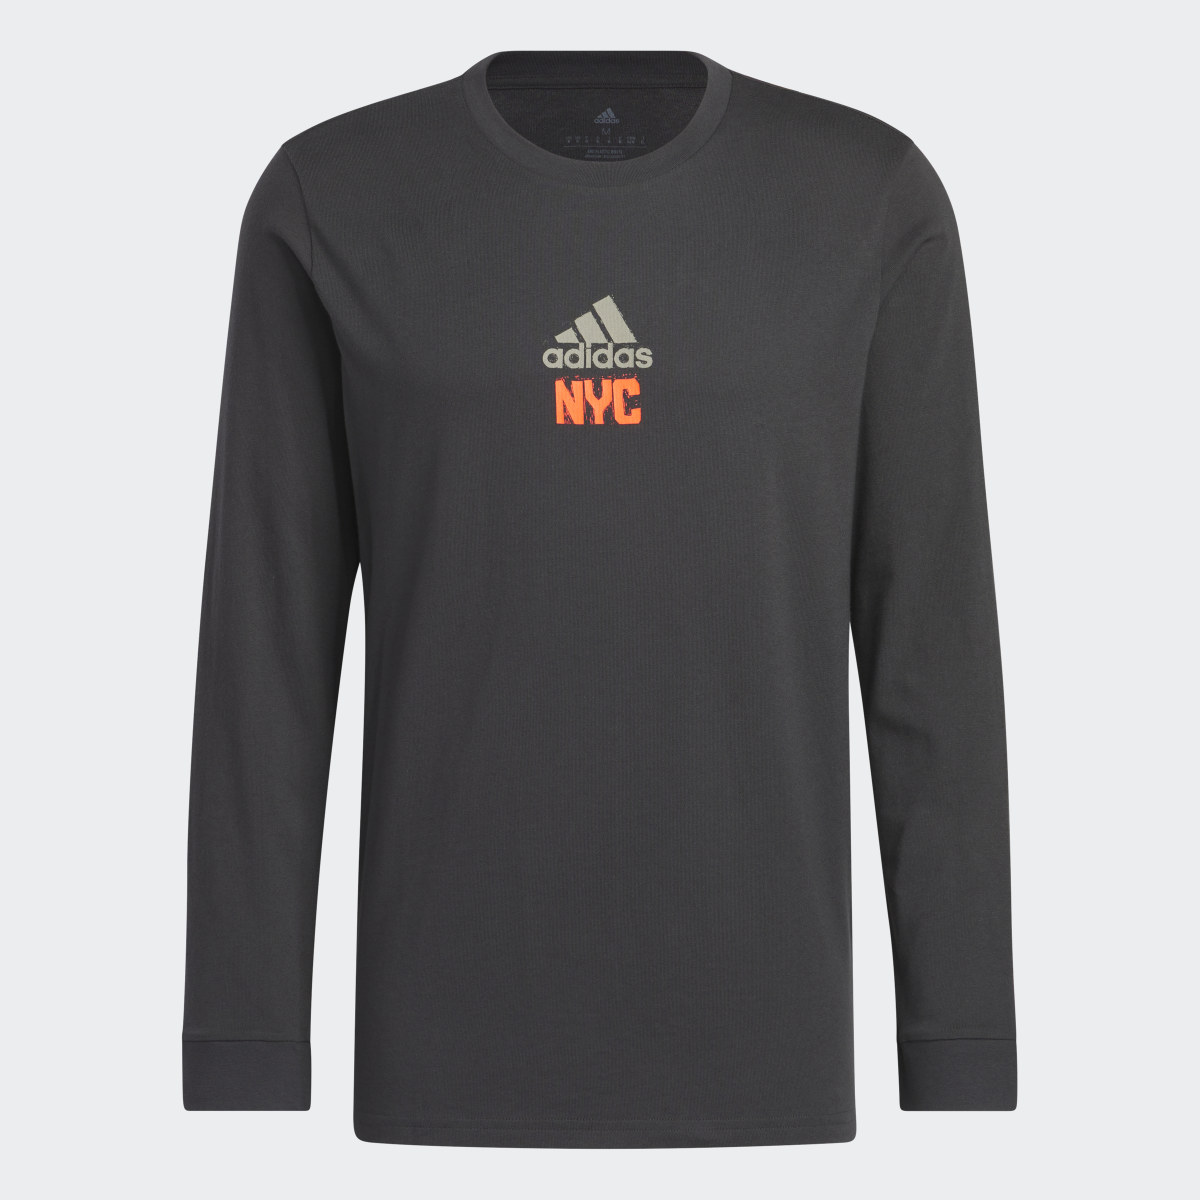 Adidas New York Long Sleeve Graphic Tee. 5